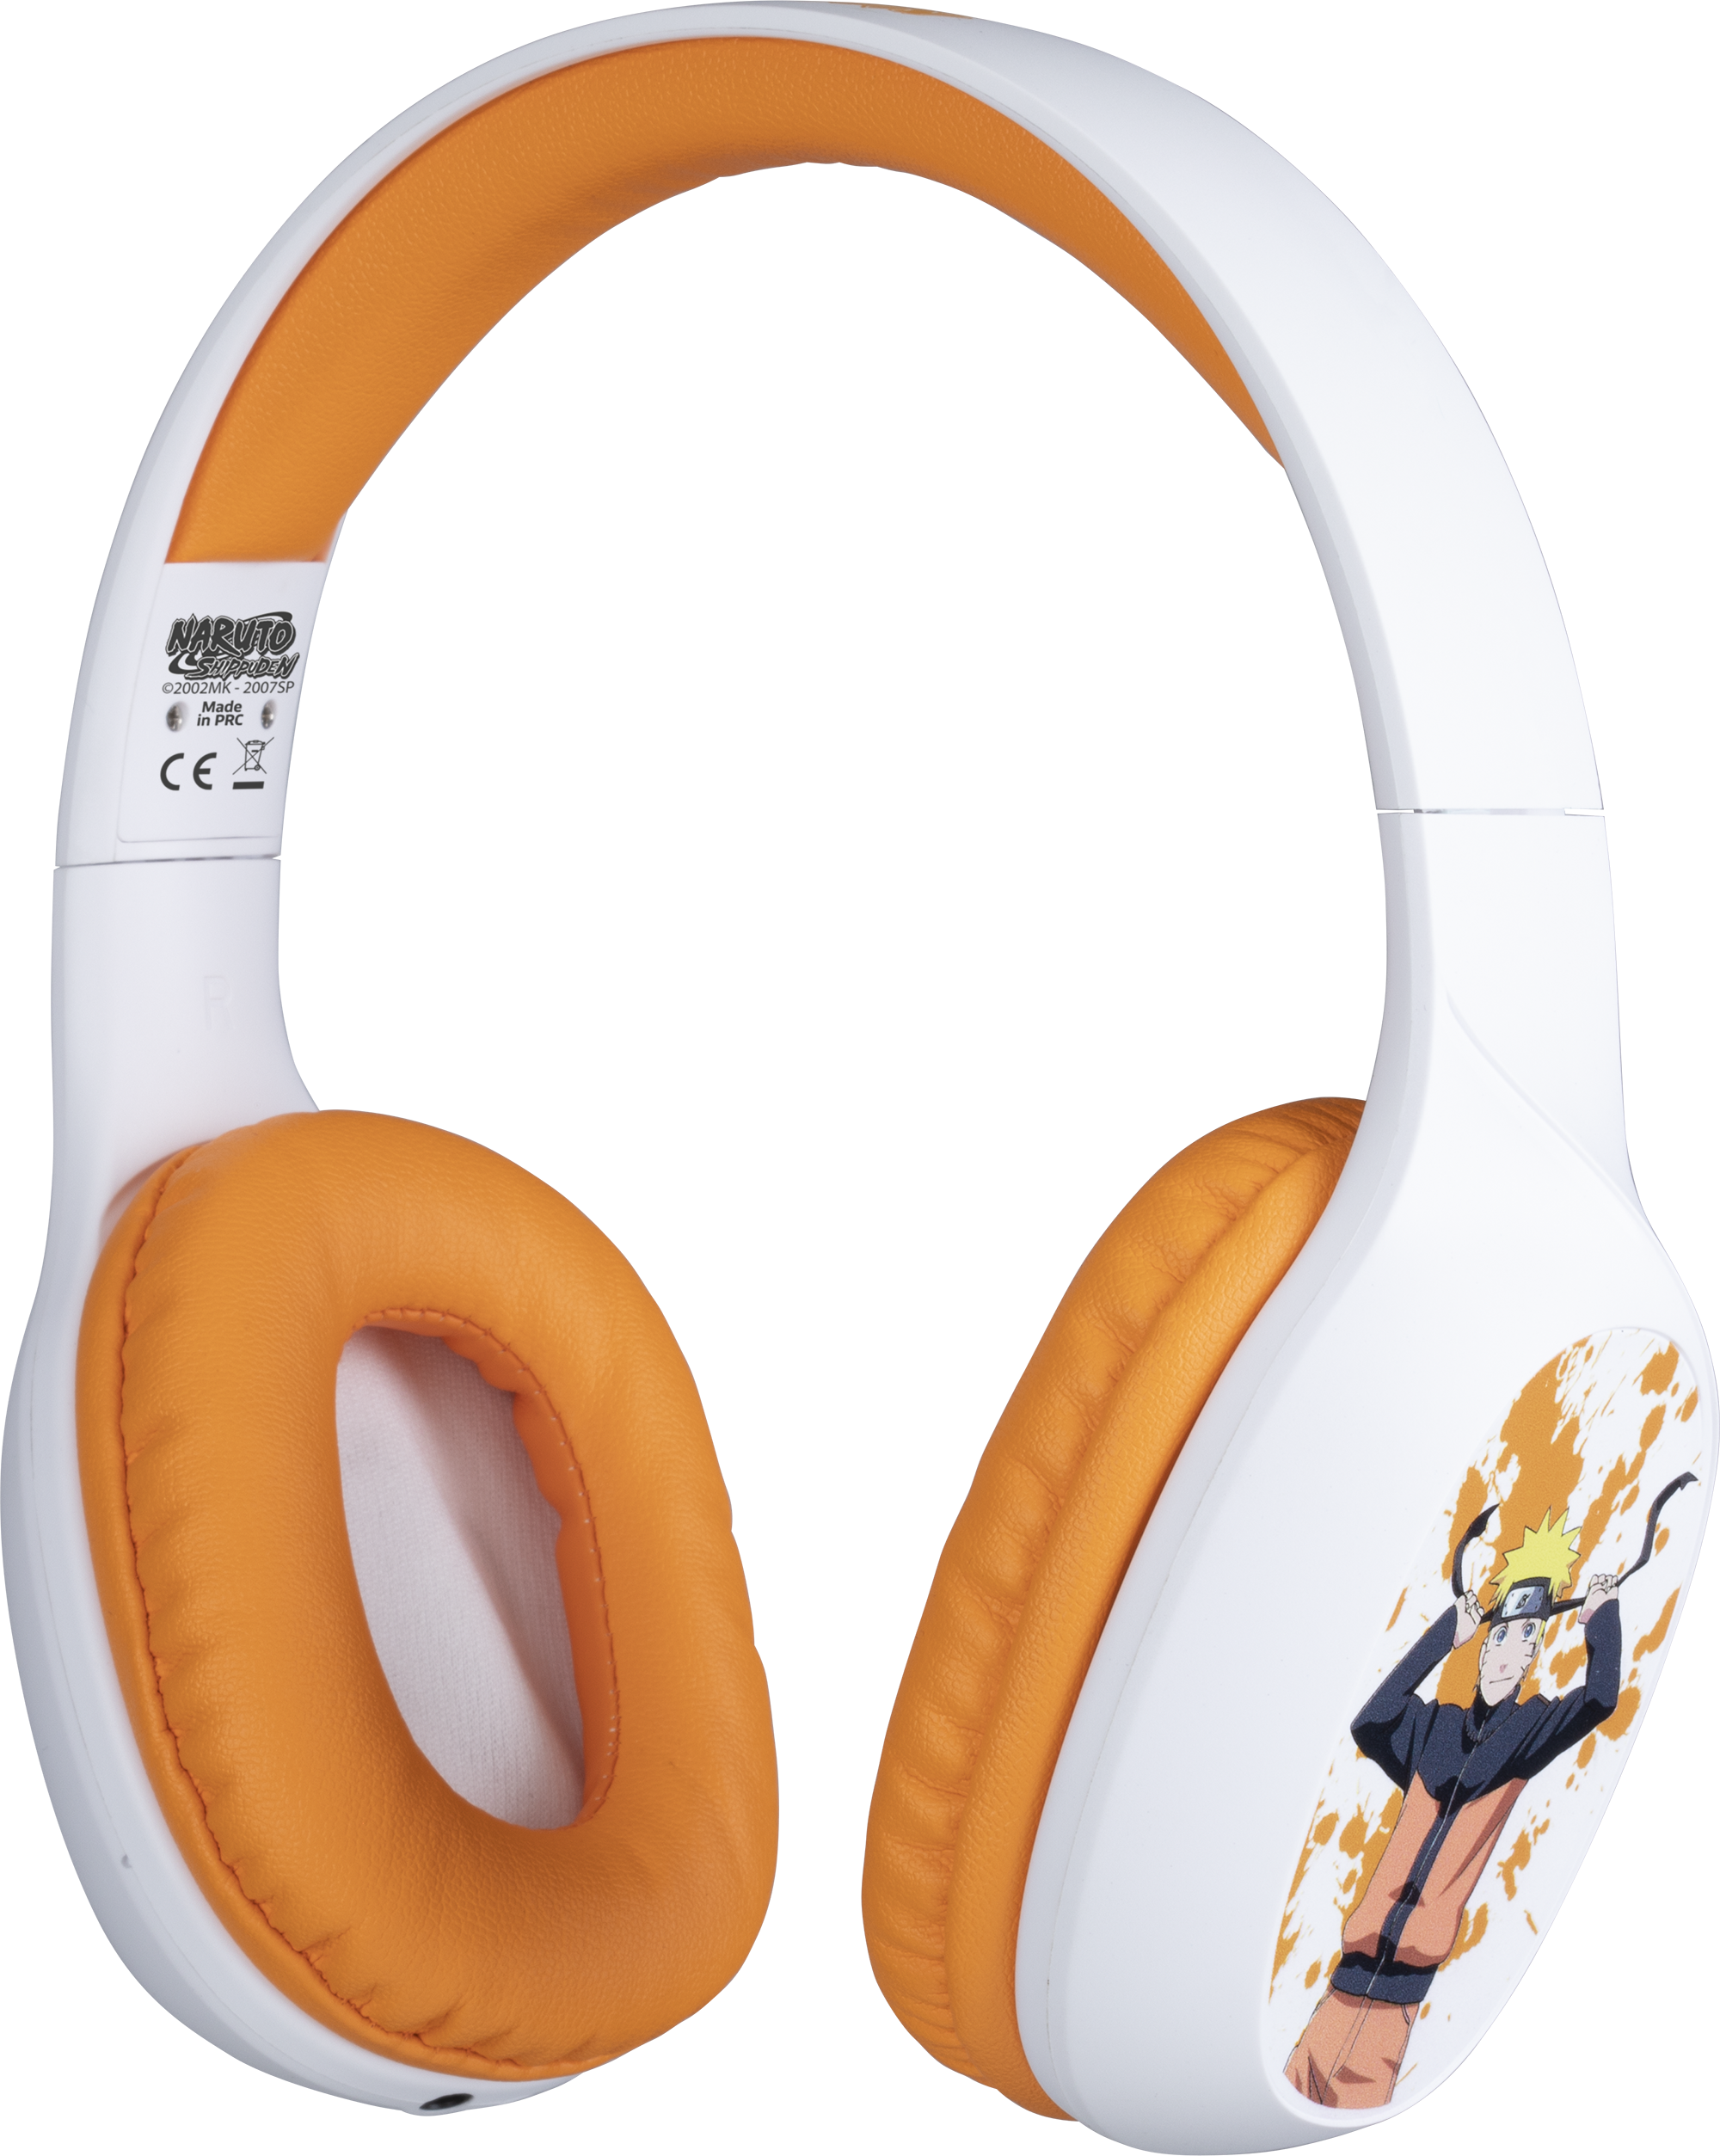 Konix Naruto Bluetooth Headset